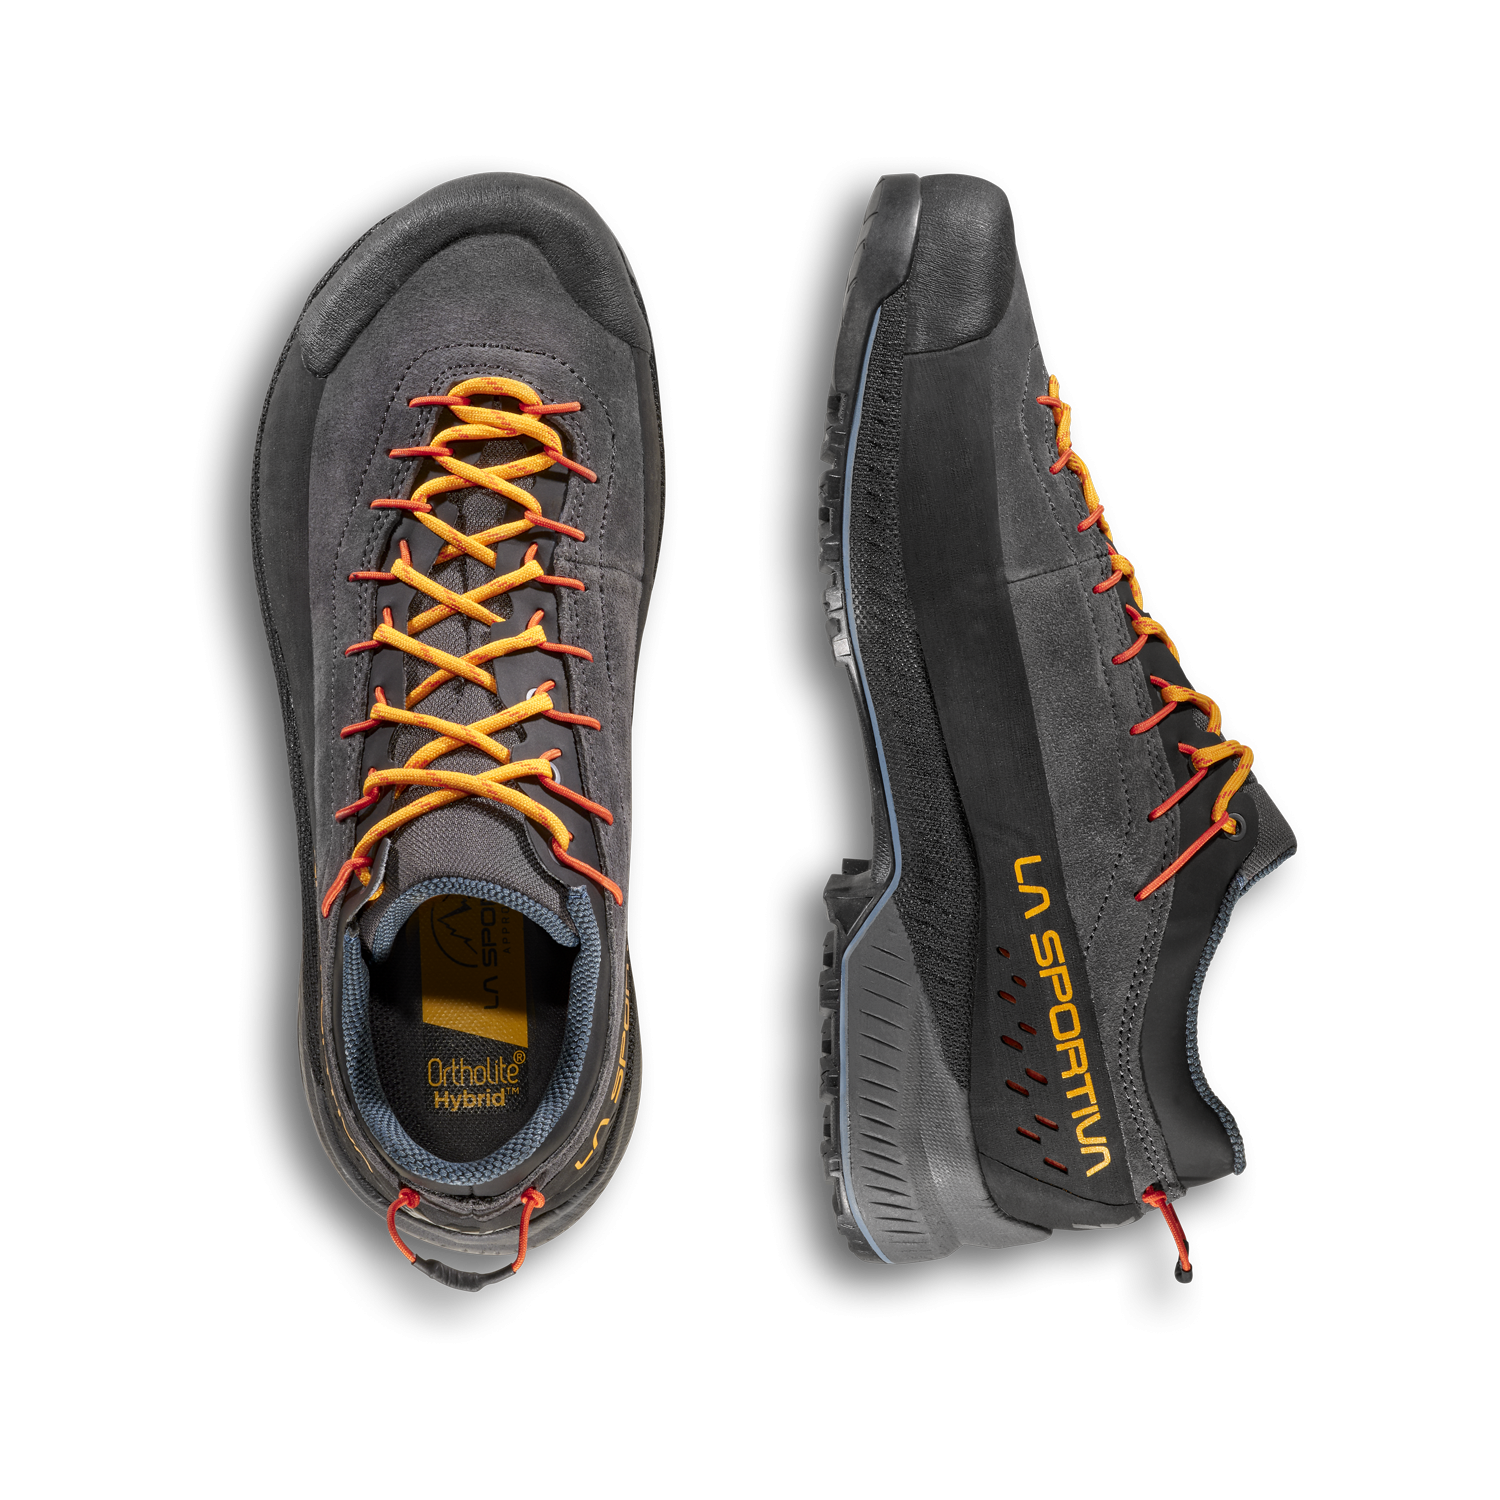 La Sportiva TX4 Evo - Mens approach shoes in carbon papaya colour